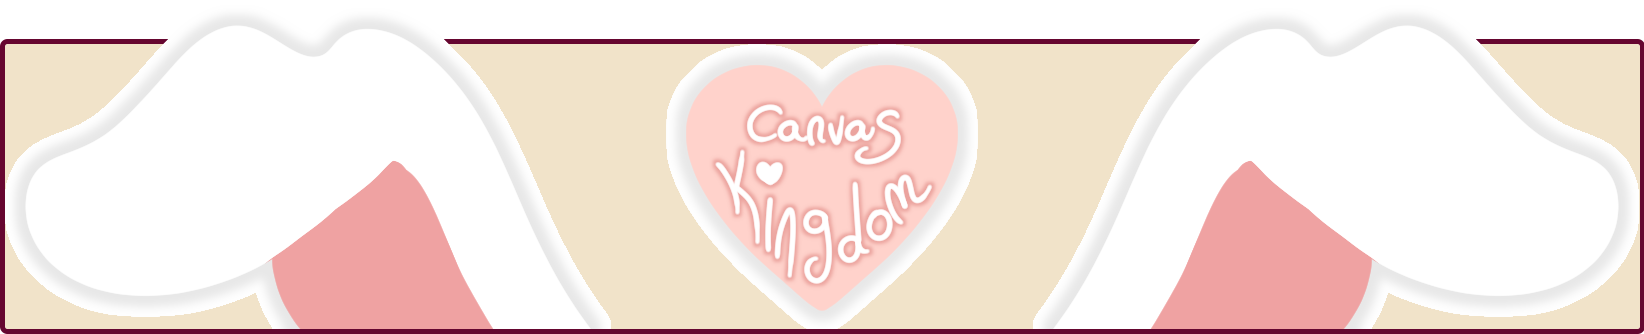 Canvas Kingdom header